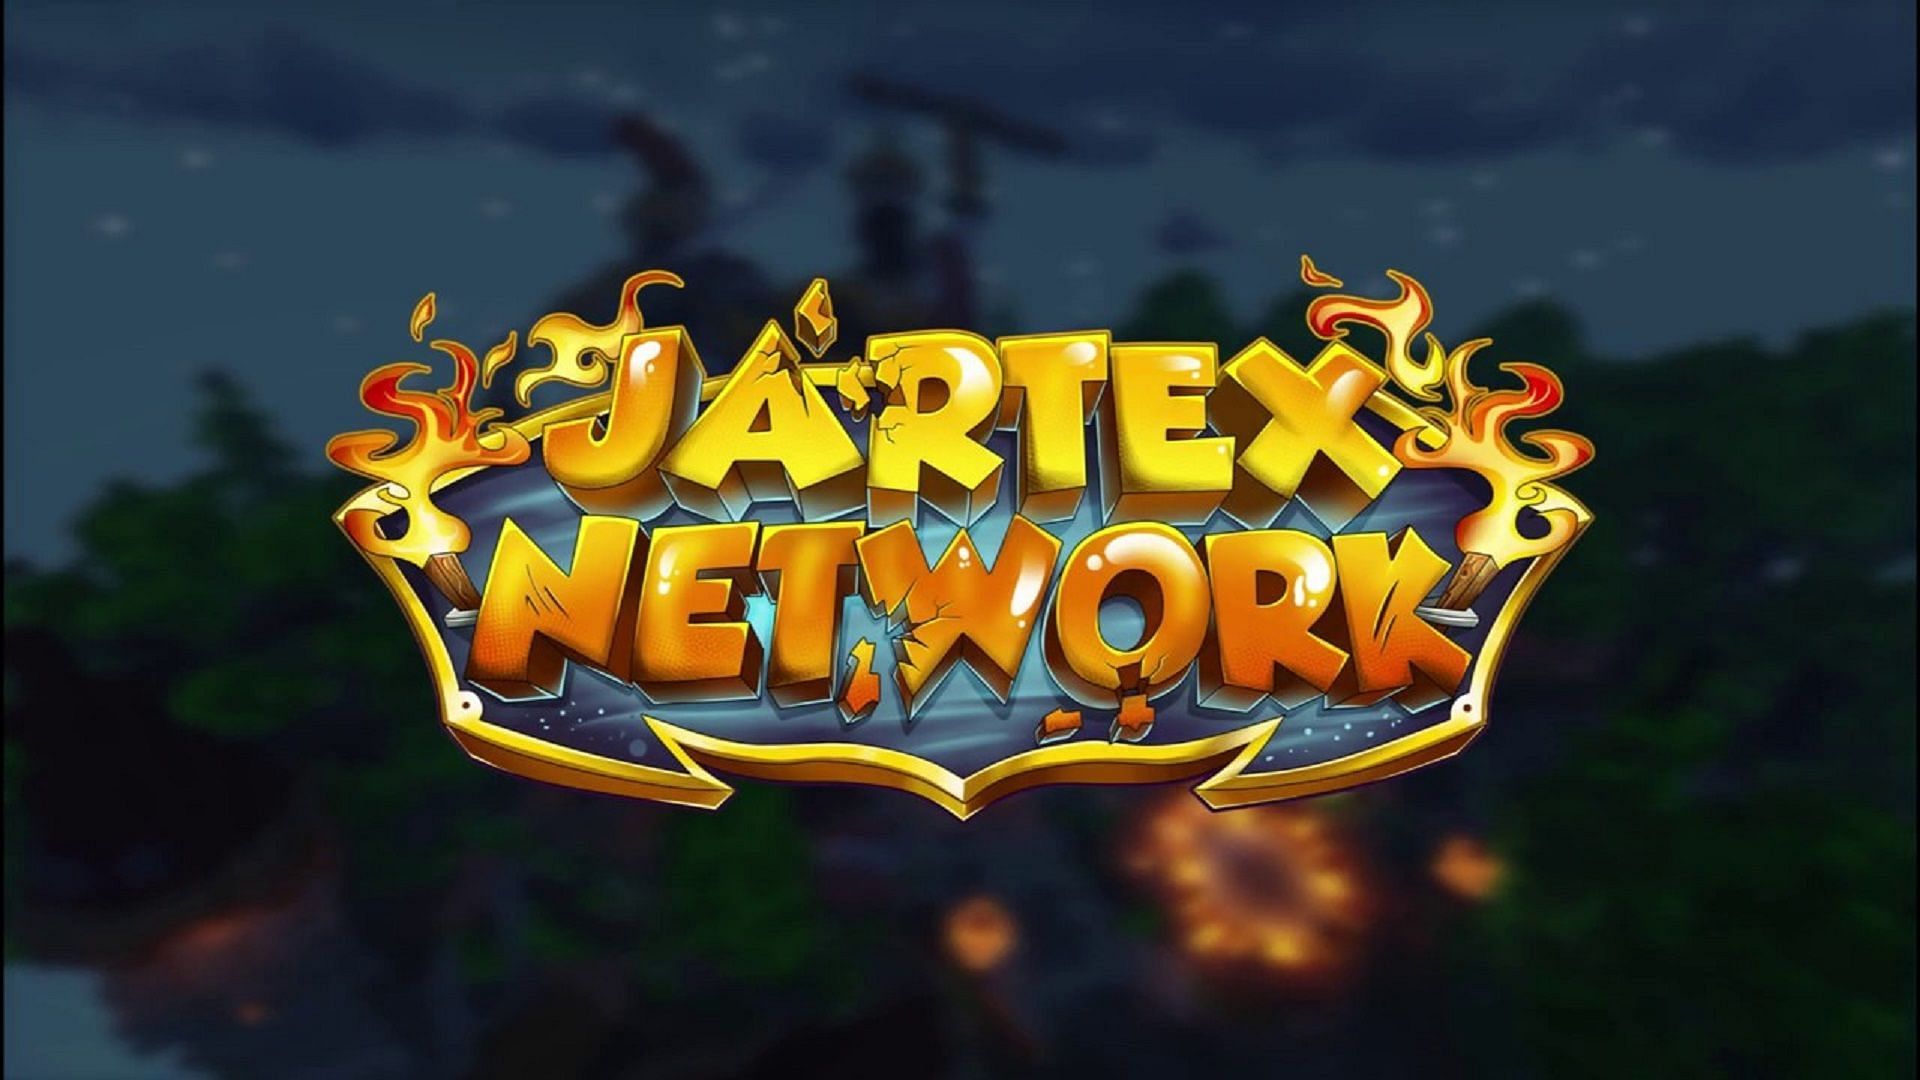 Jartex Network offers plenty of minigame options, including Bedwars (Image via Jartex Network)